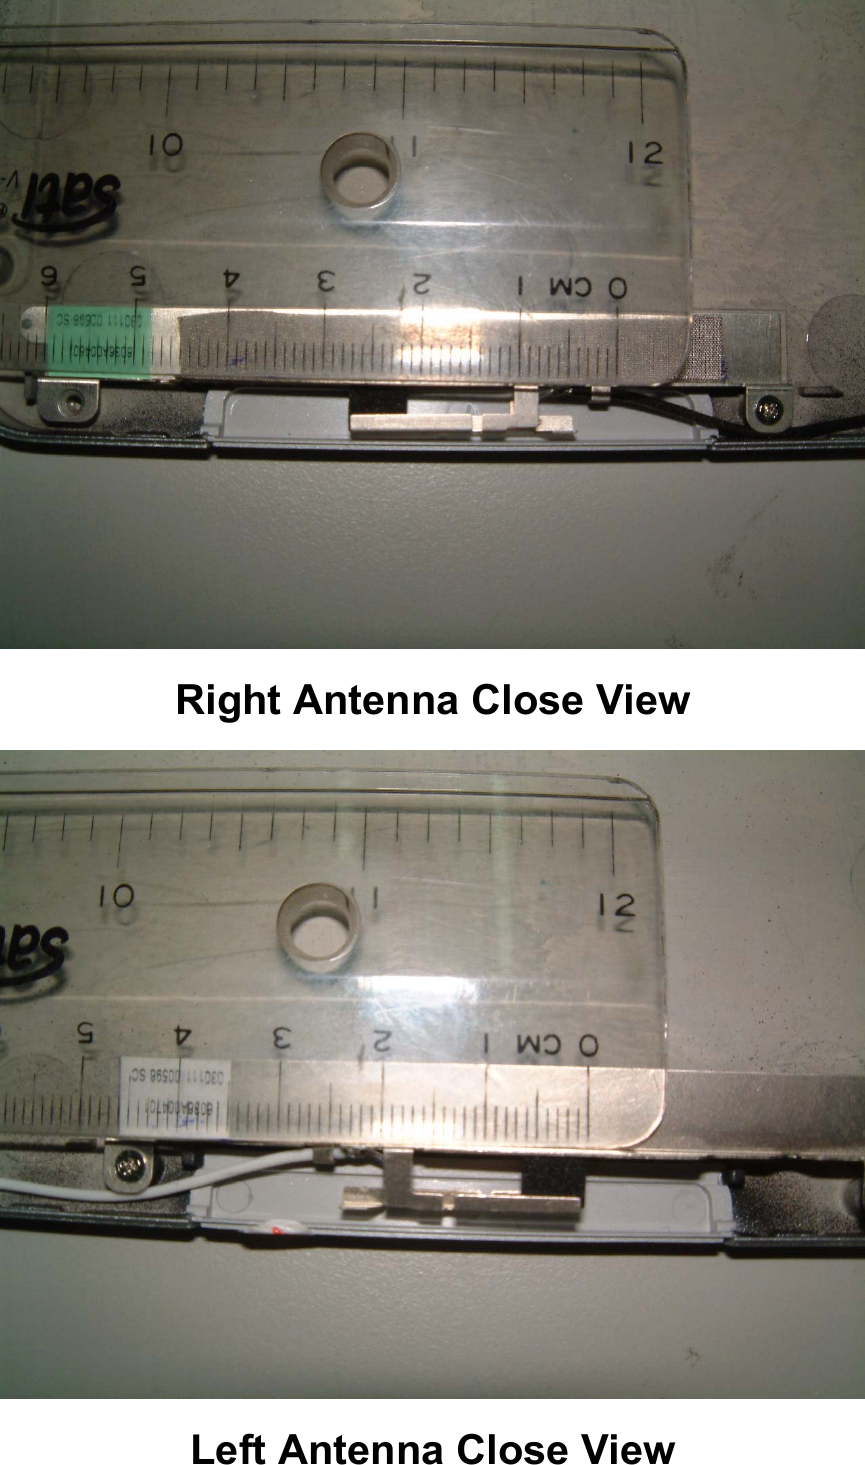 Right Antenna Close ViewLeft Antenna Close View